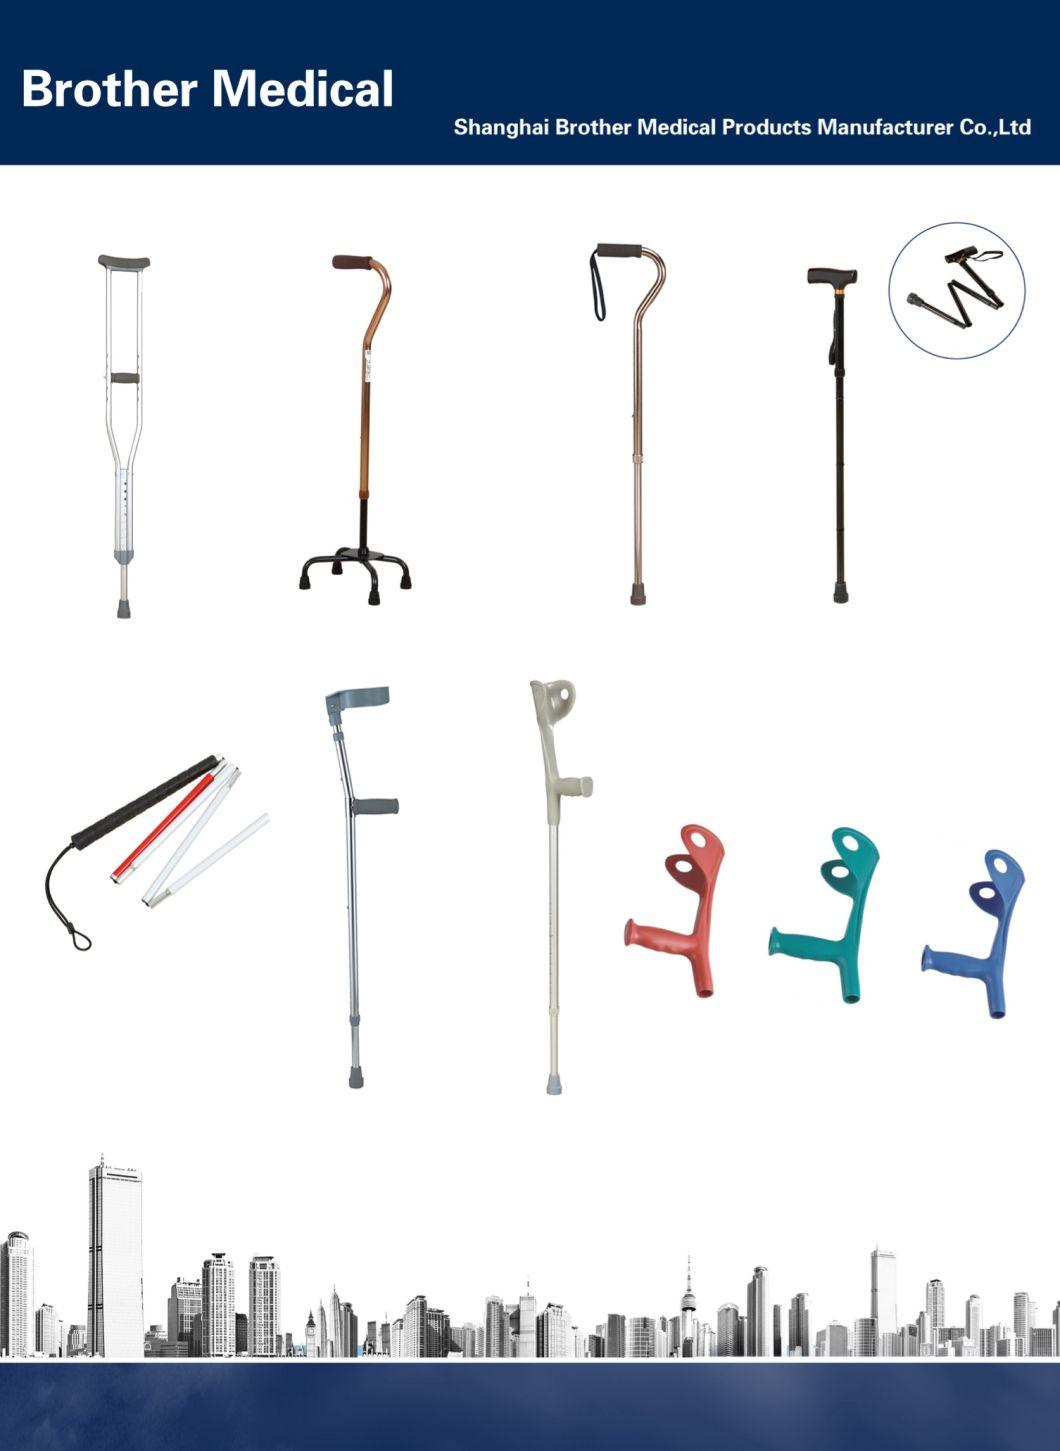 Luminum Axillary Crutch Aluminum Single Cane Alloy Height Adjust TPR Hand Grip Non-Slip Rubber Walking Stick Medium Size